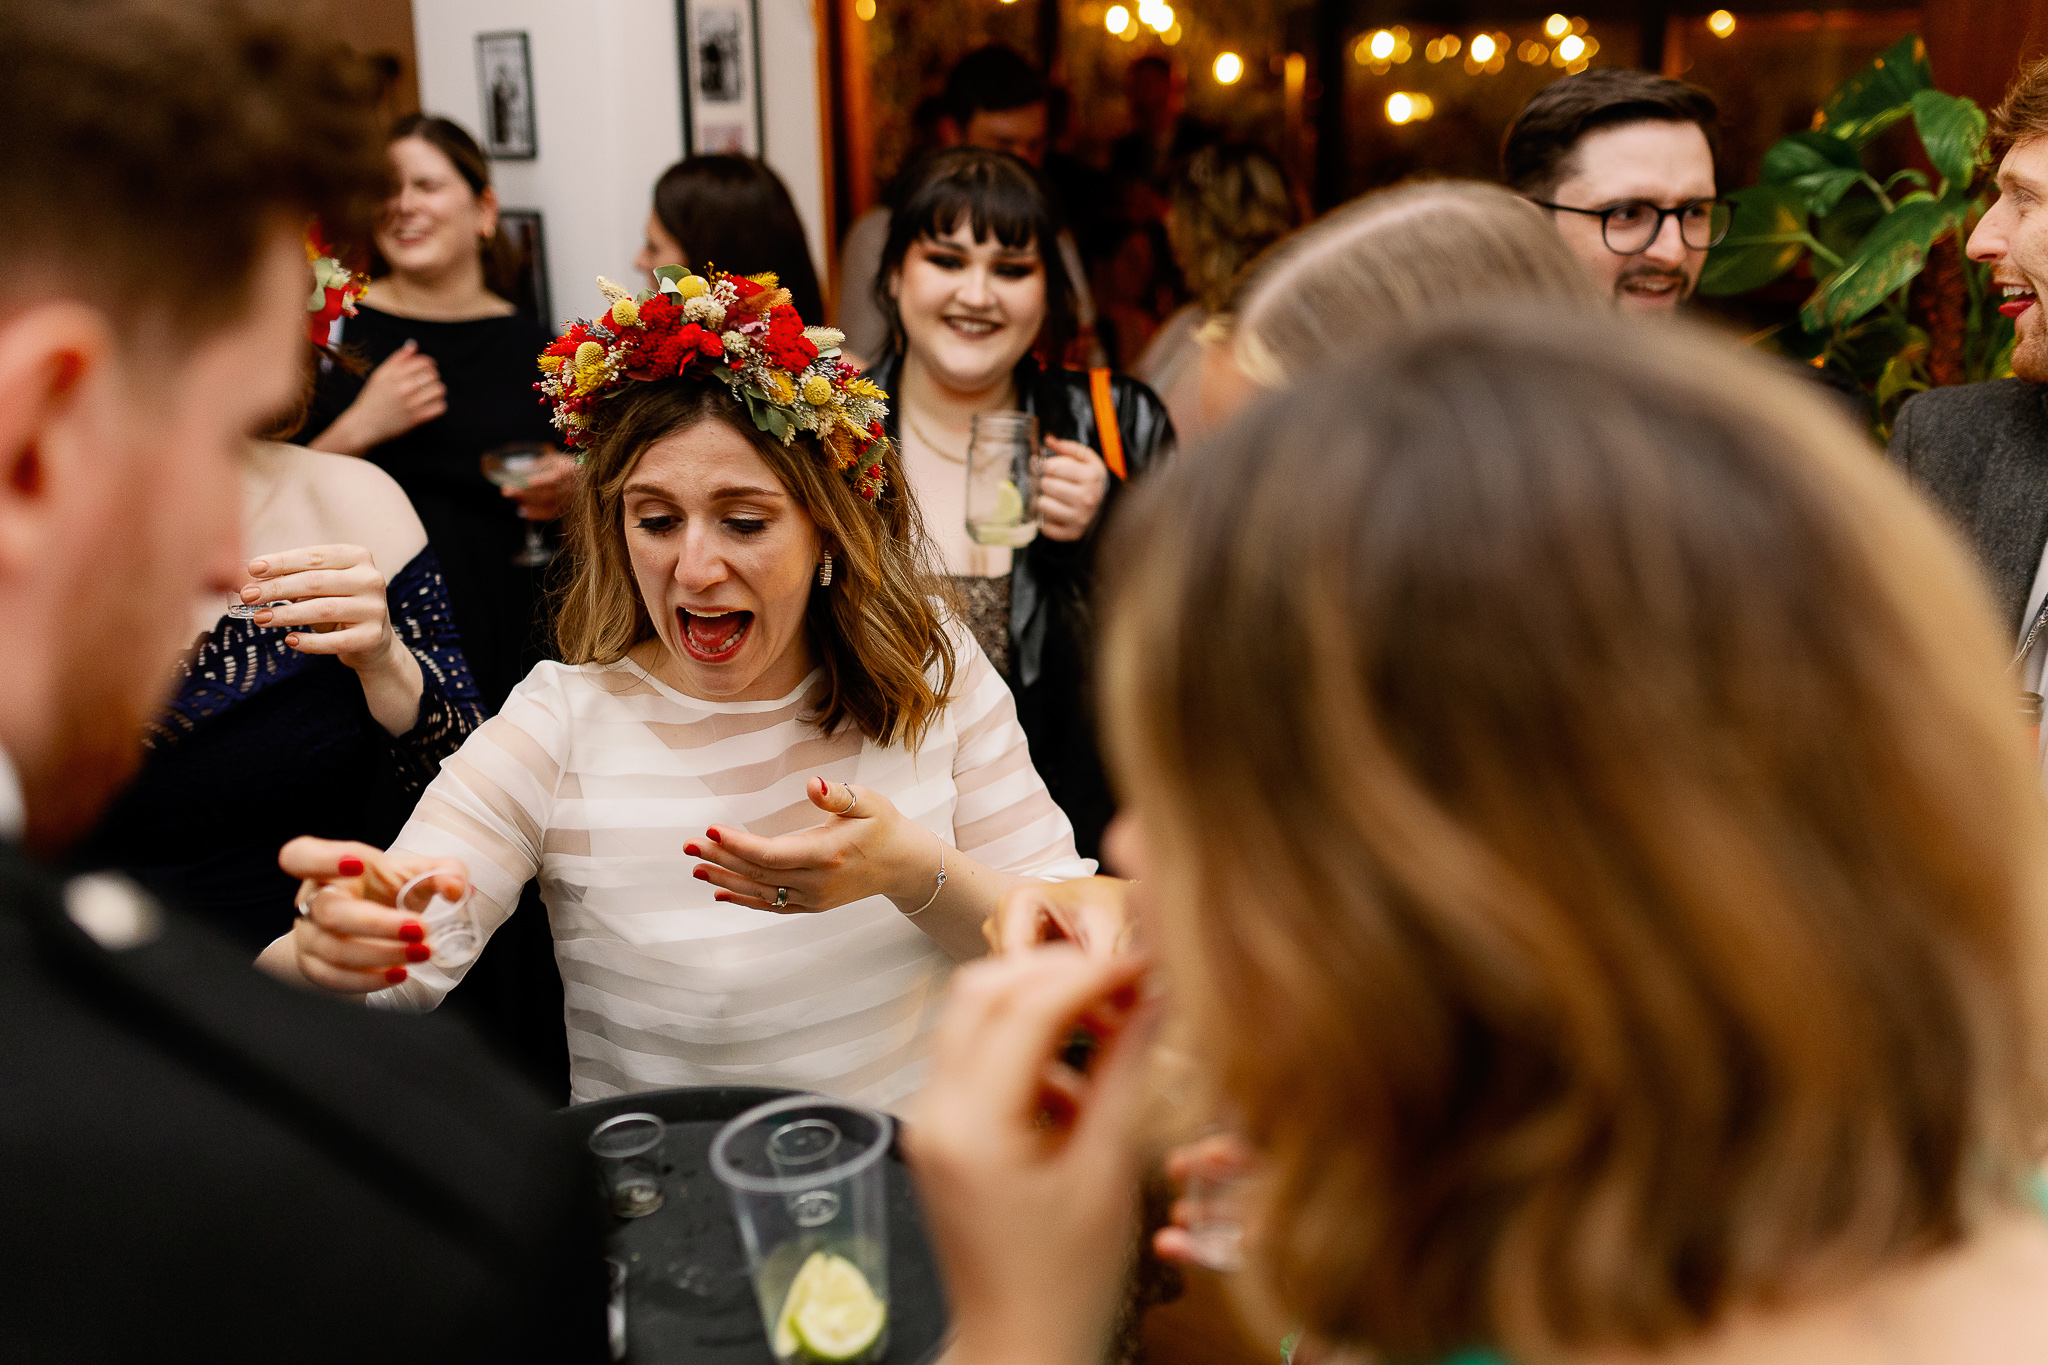 Gemma + Gav’s Spanish meets Celtic Wedding at Glasgow Botanical Gardens followed by a Spanish Feast at Studio 93 in Glasgow’s West End